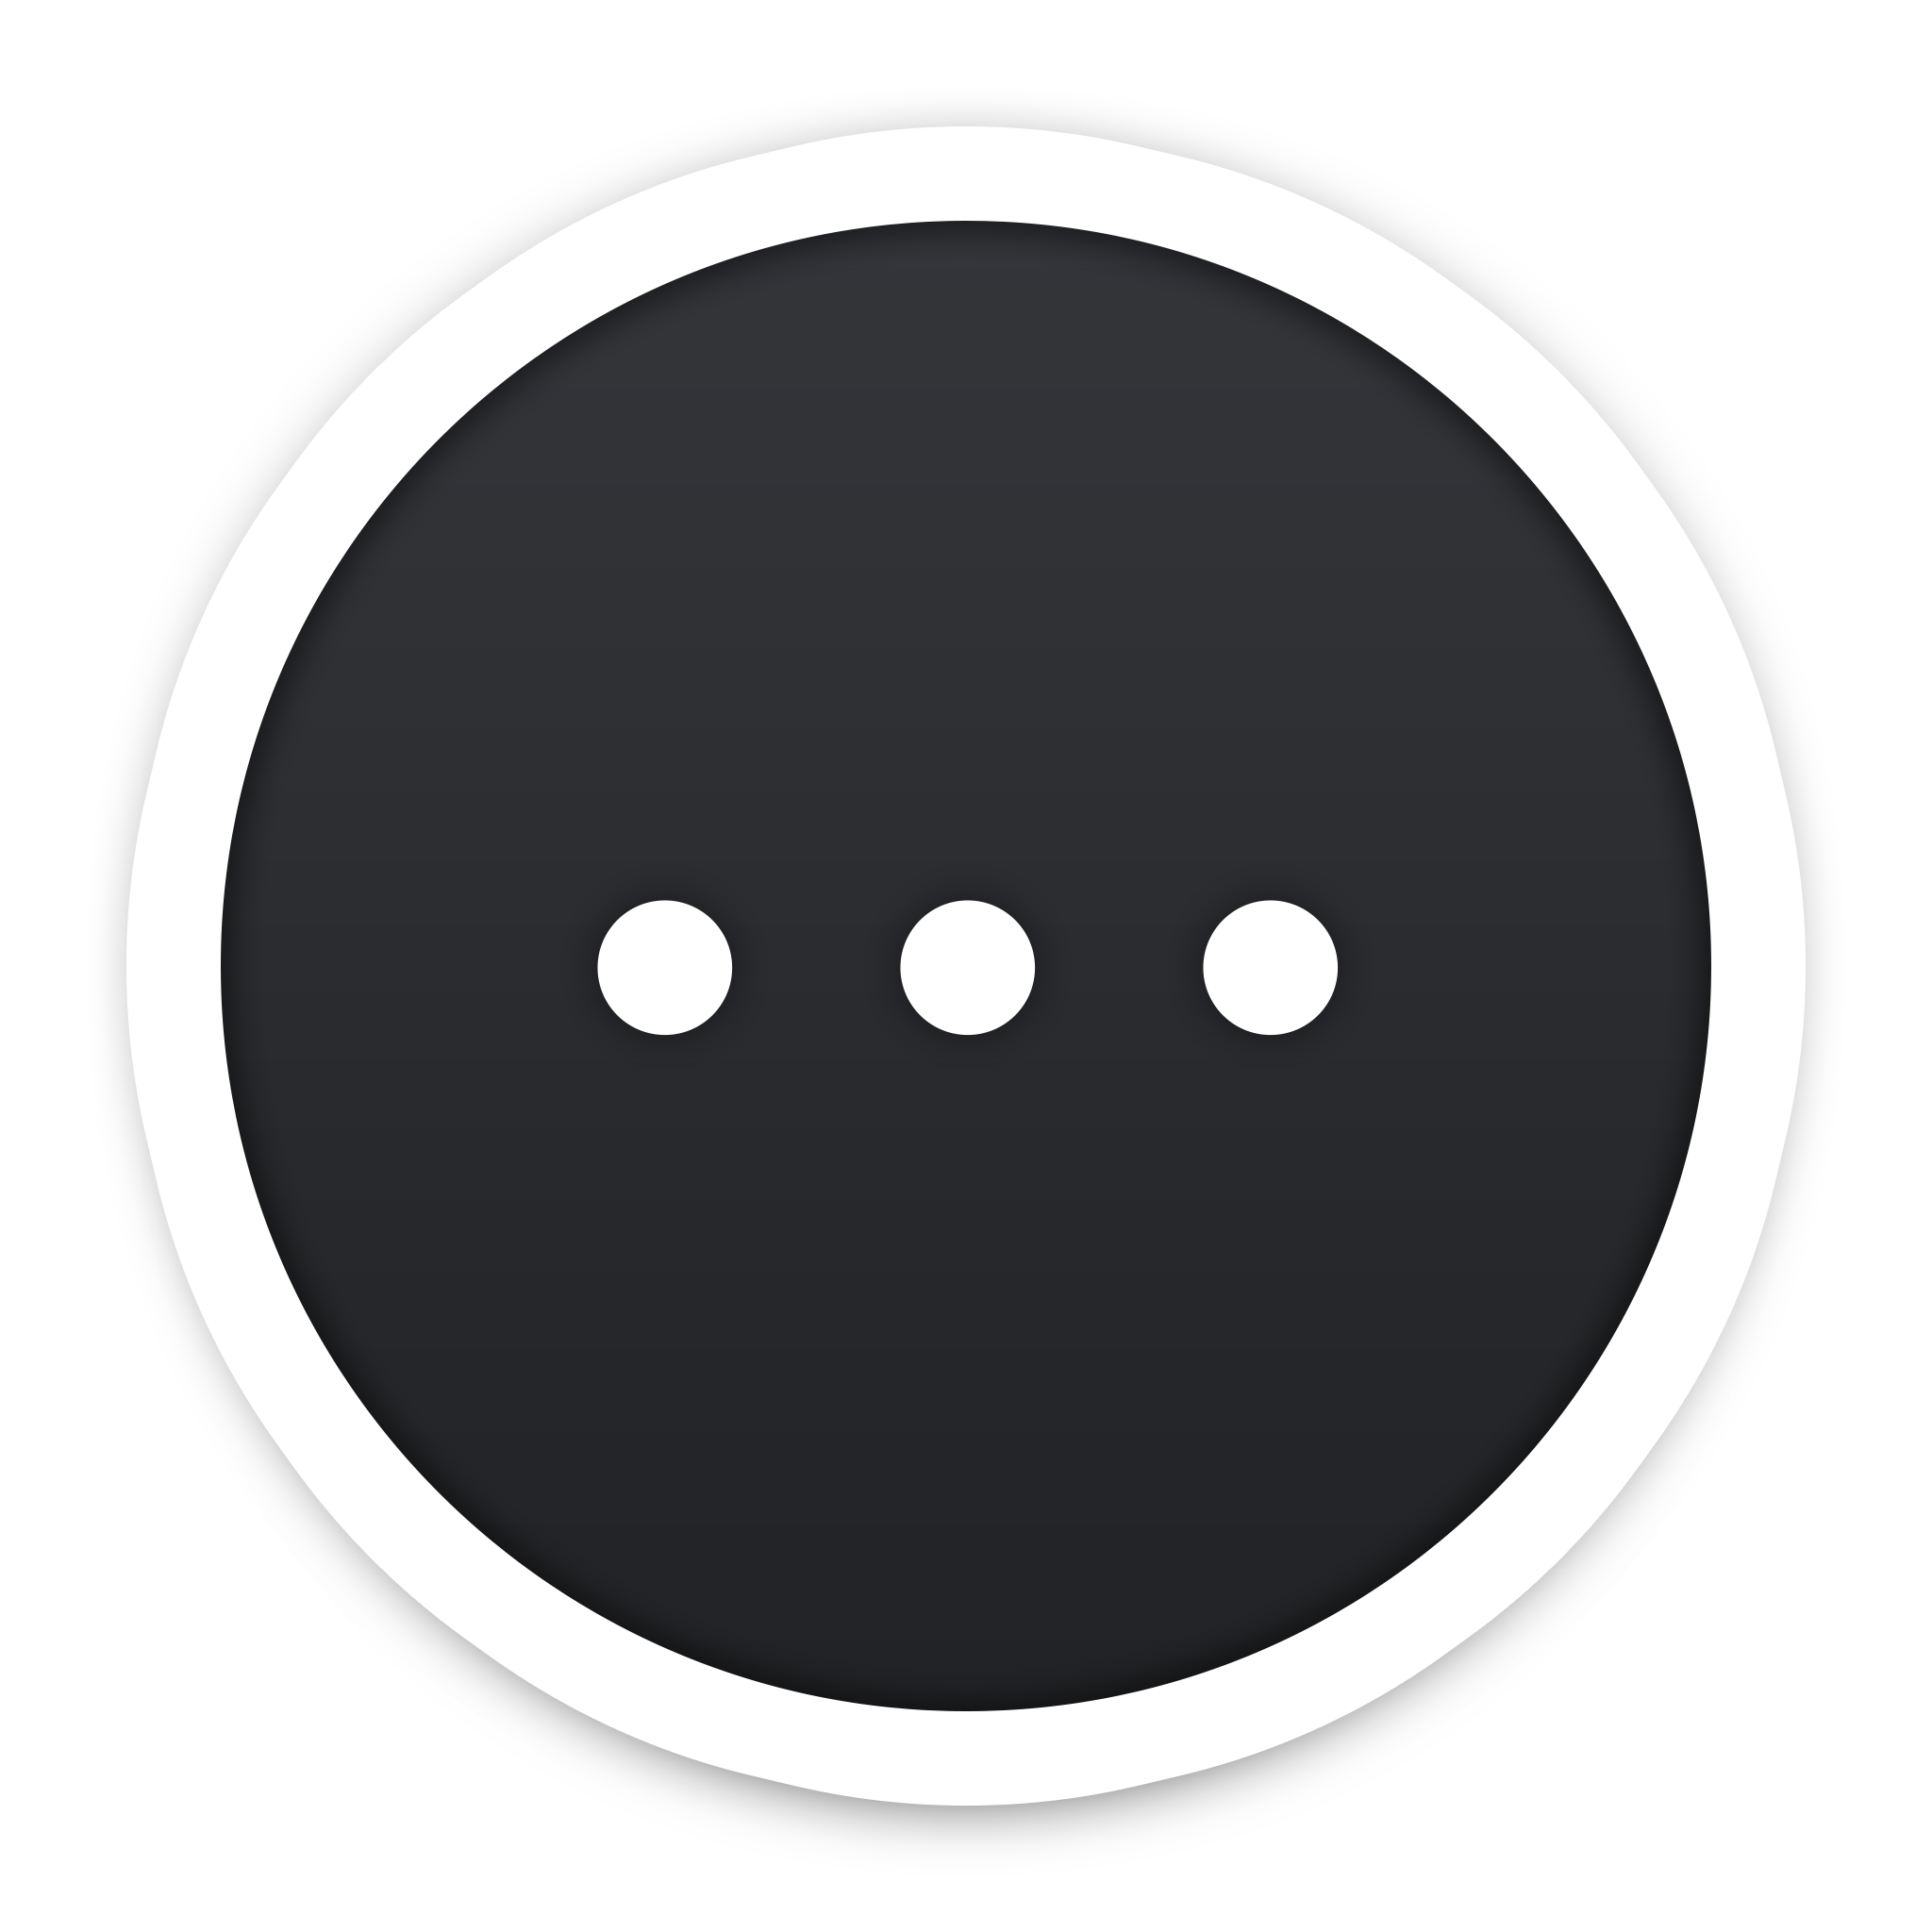 xbar logo: a circle with three dots inside it